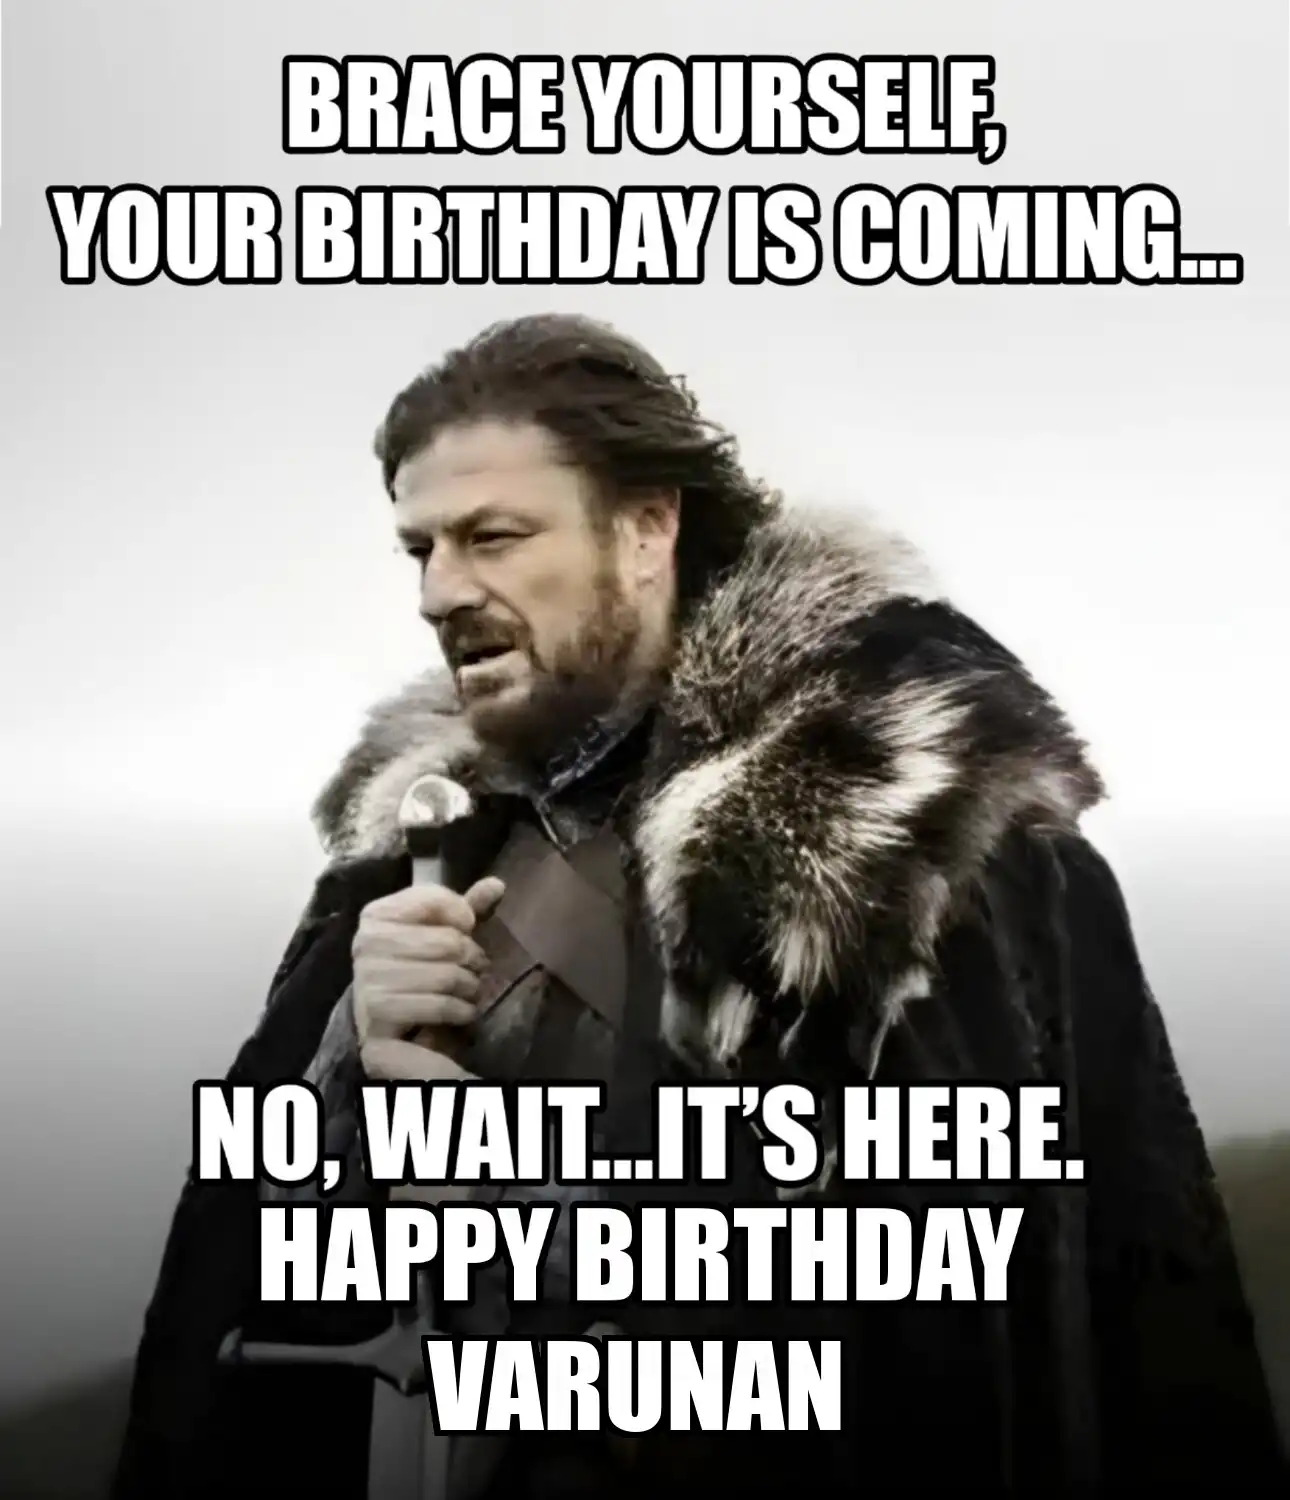 Happy Birthday Varunan Brace Yourself Your Birthday Is Coming Meme